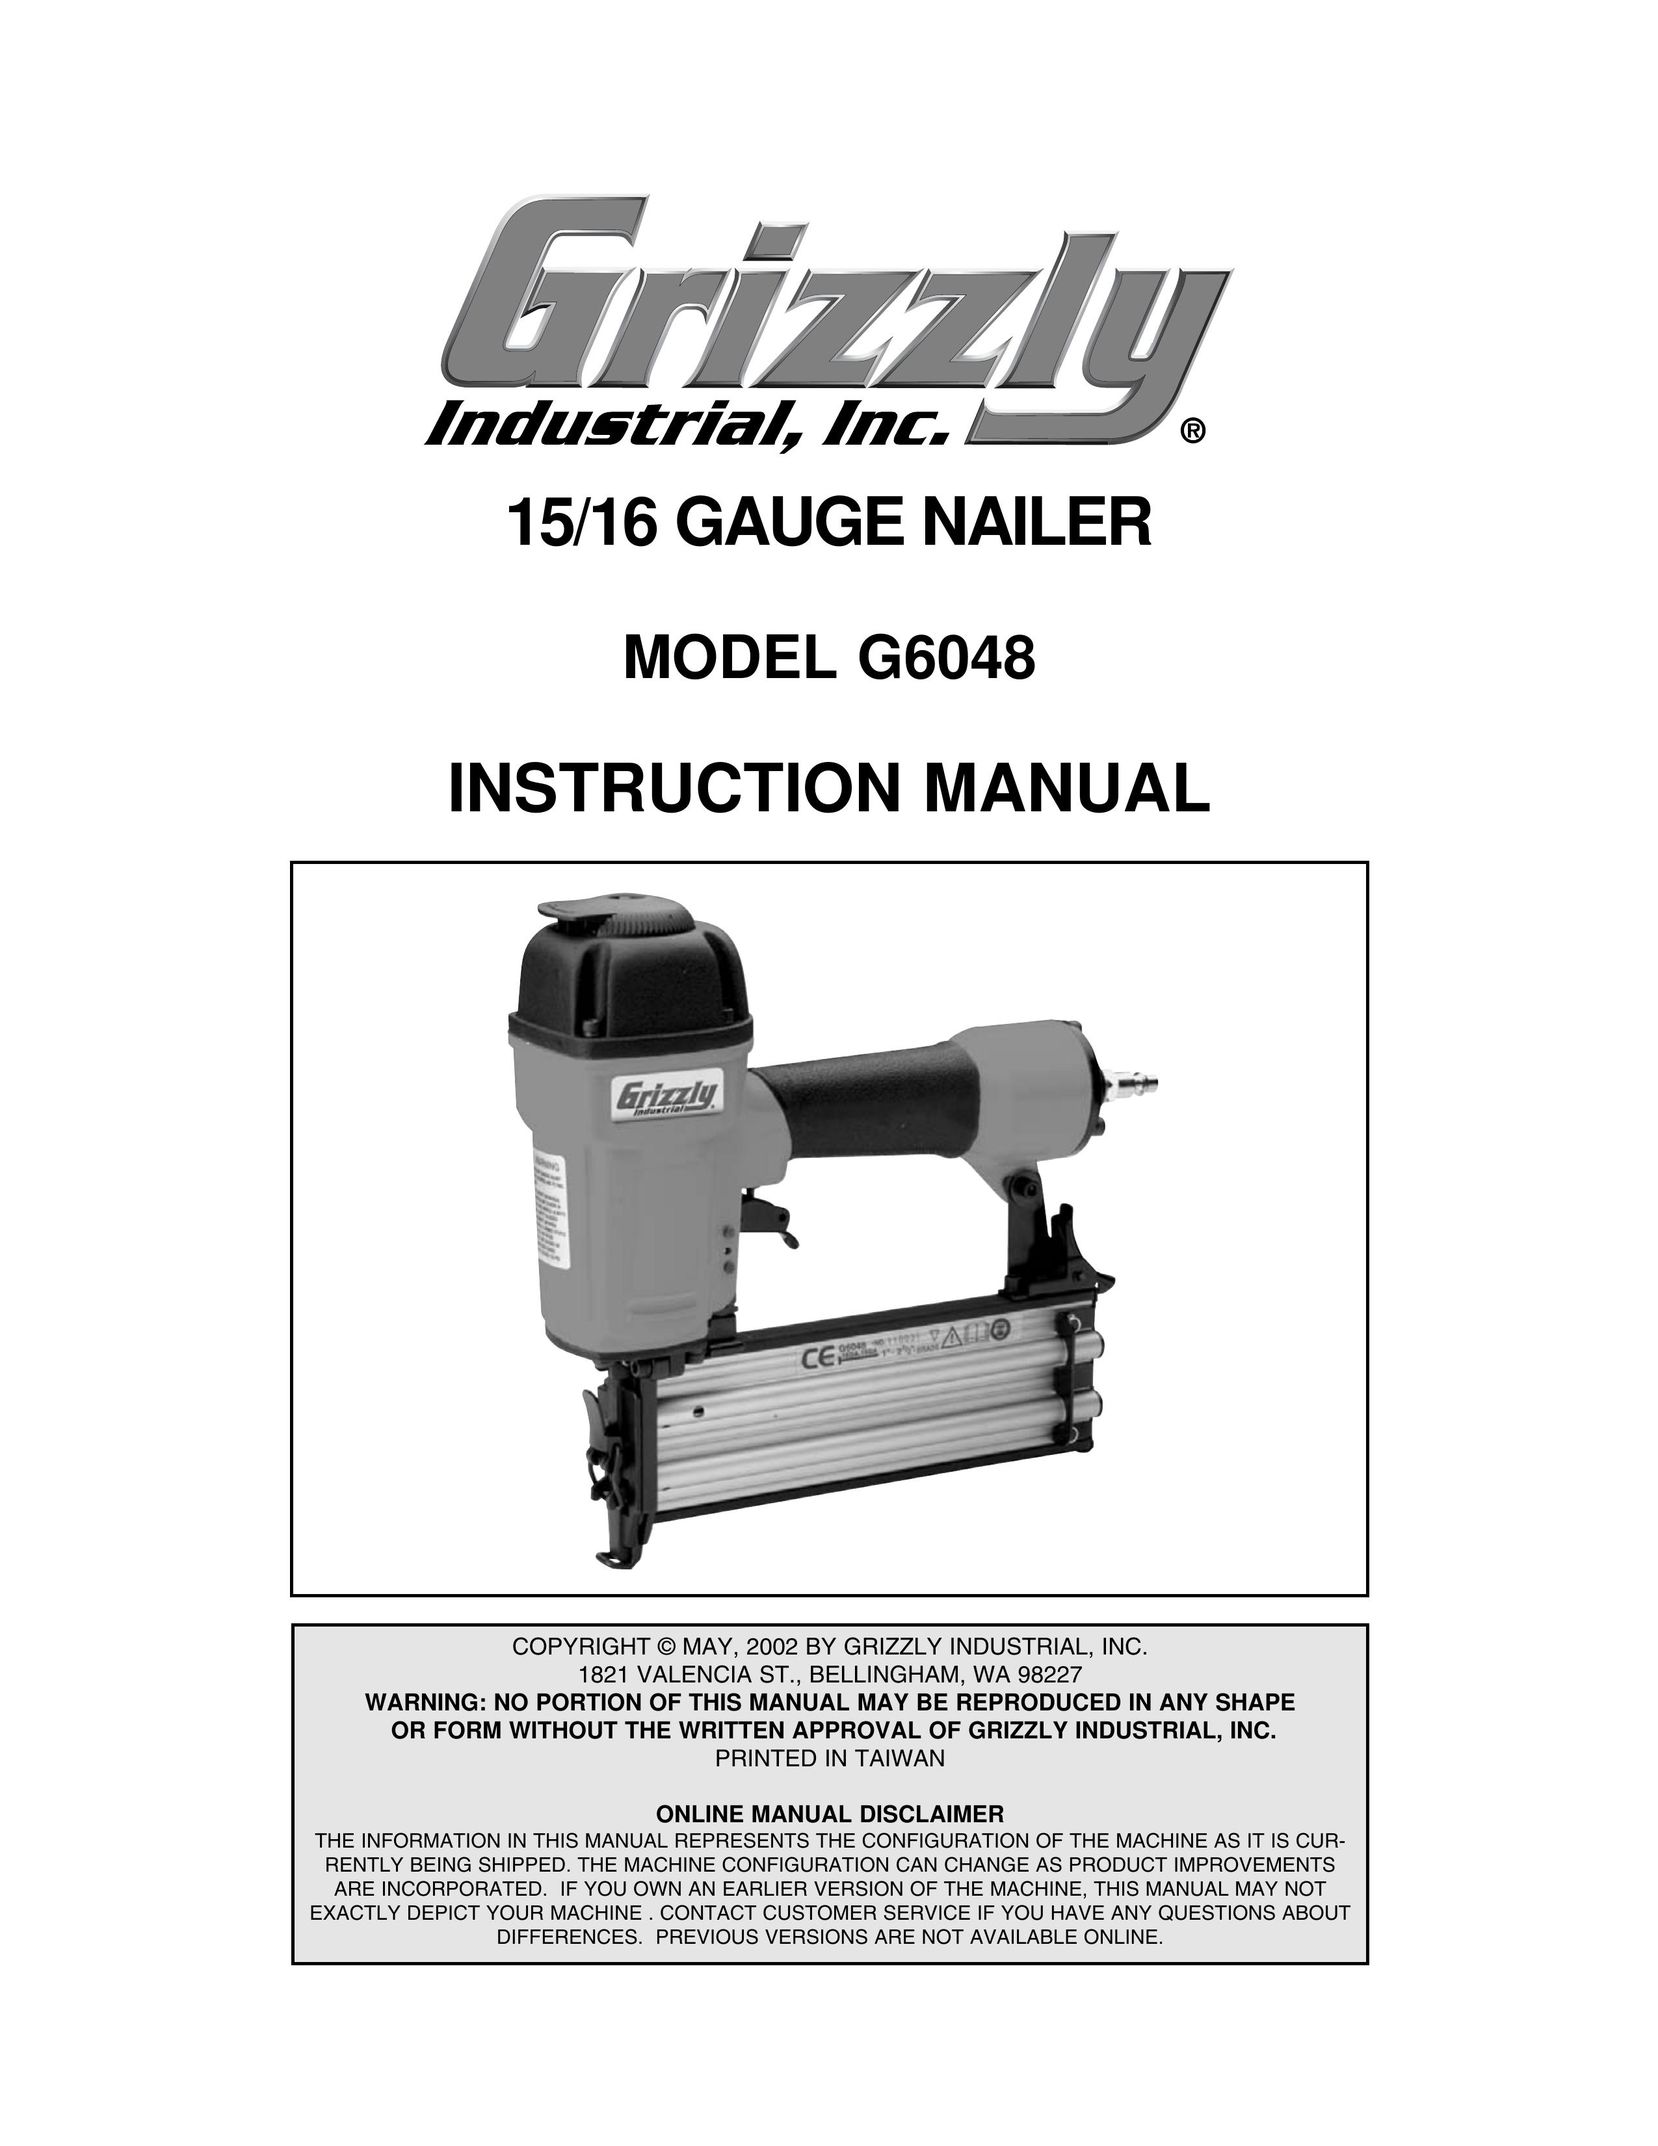 Grizzly G6048 Nail Gun User Manual